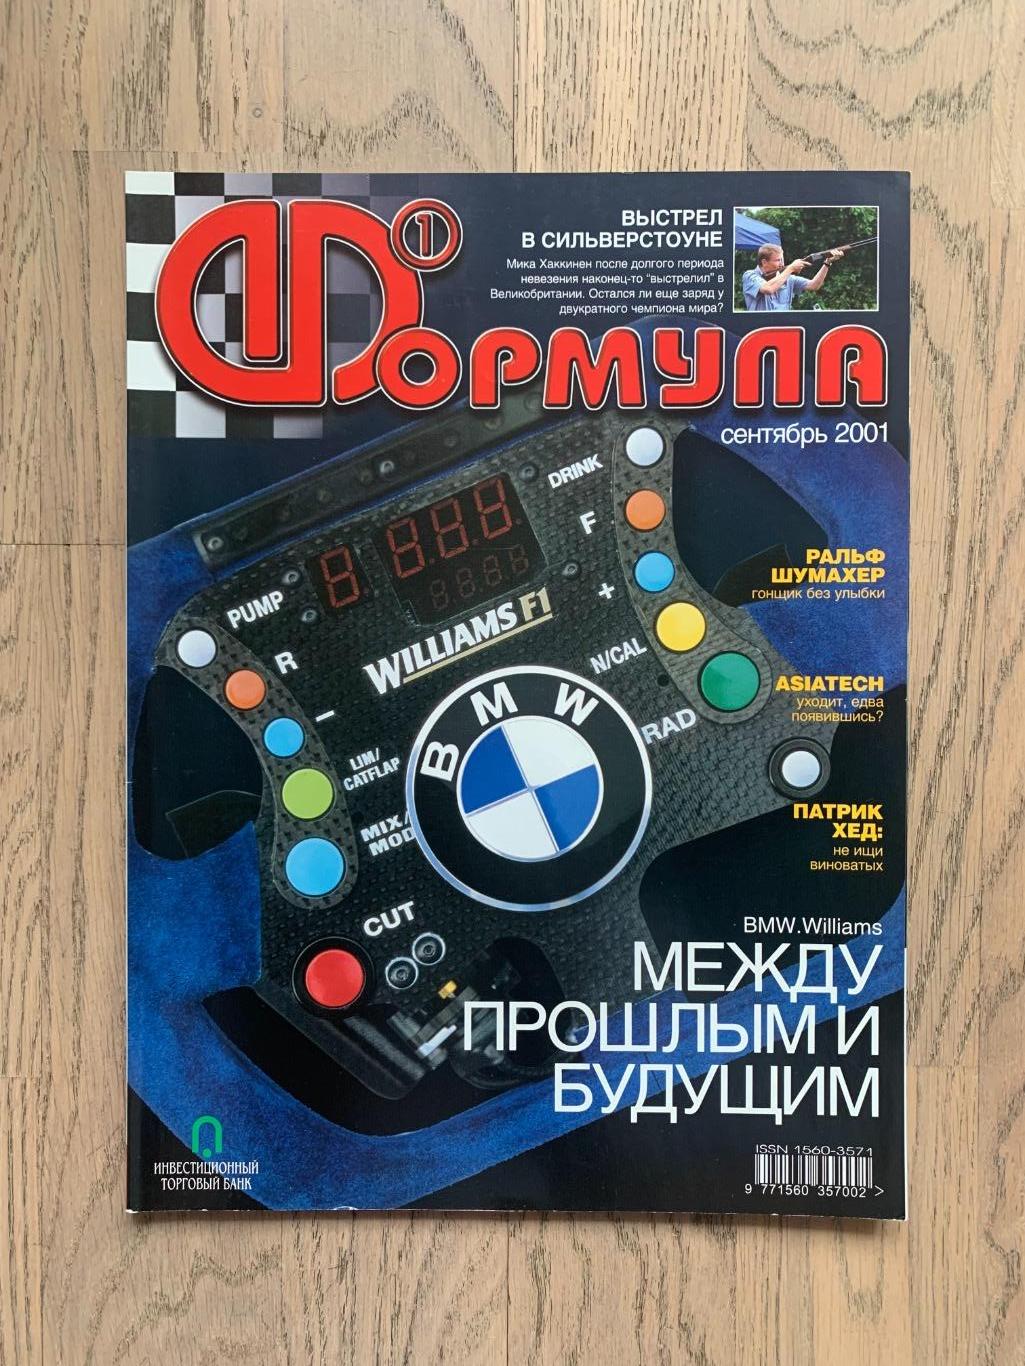 Журнал Формула 1 (Formula Magazine) / сентябрь 2001